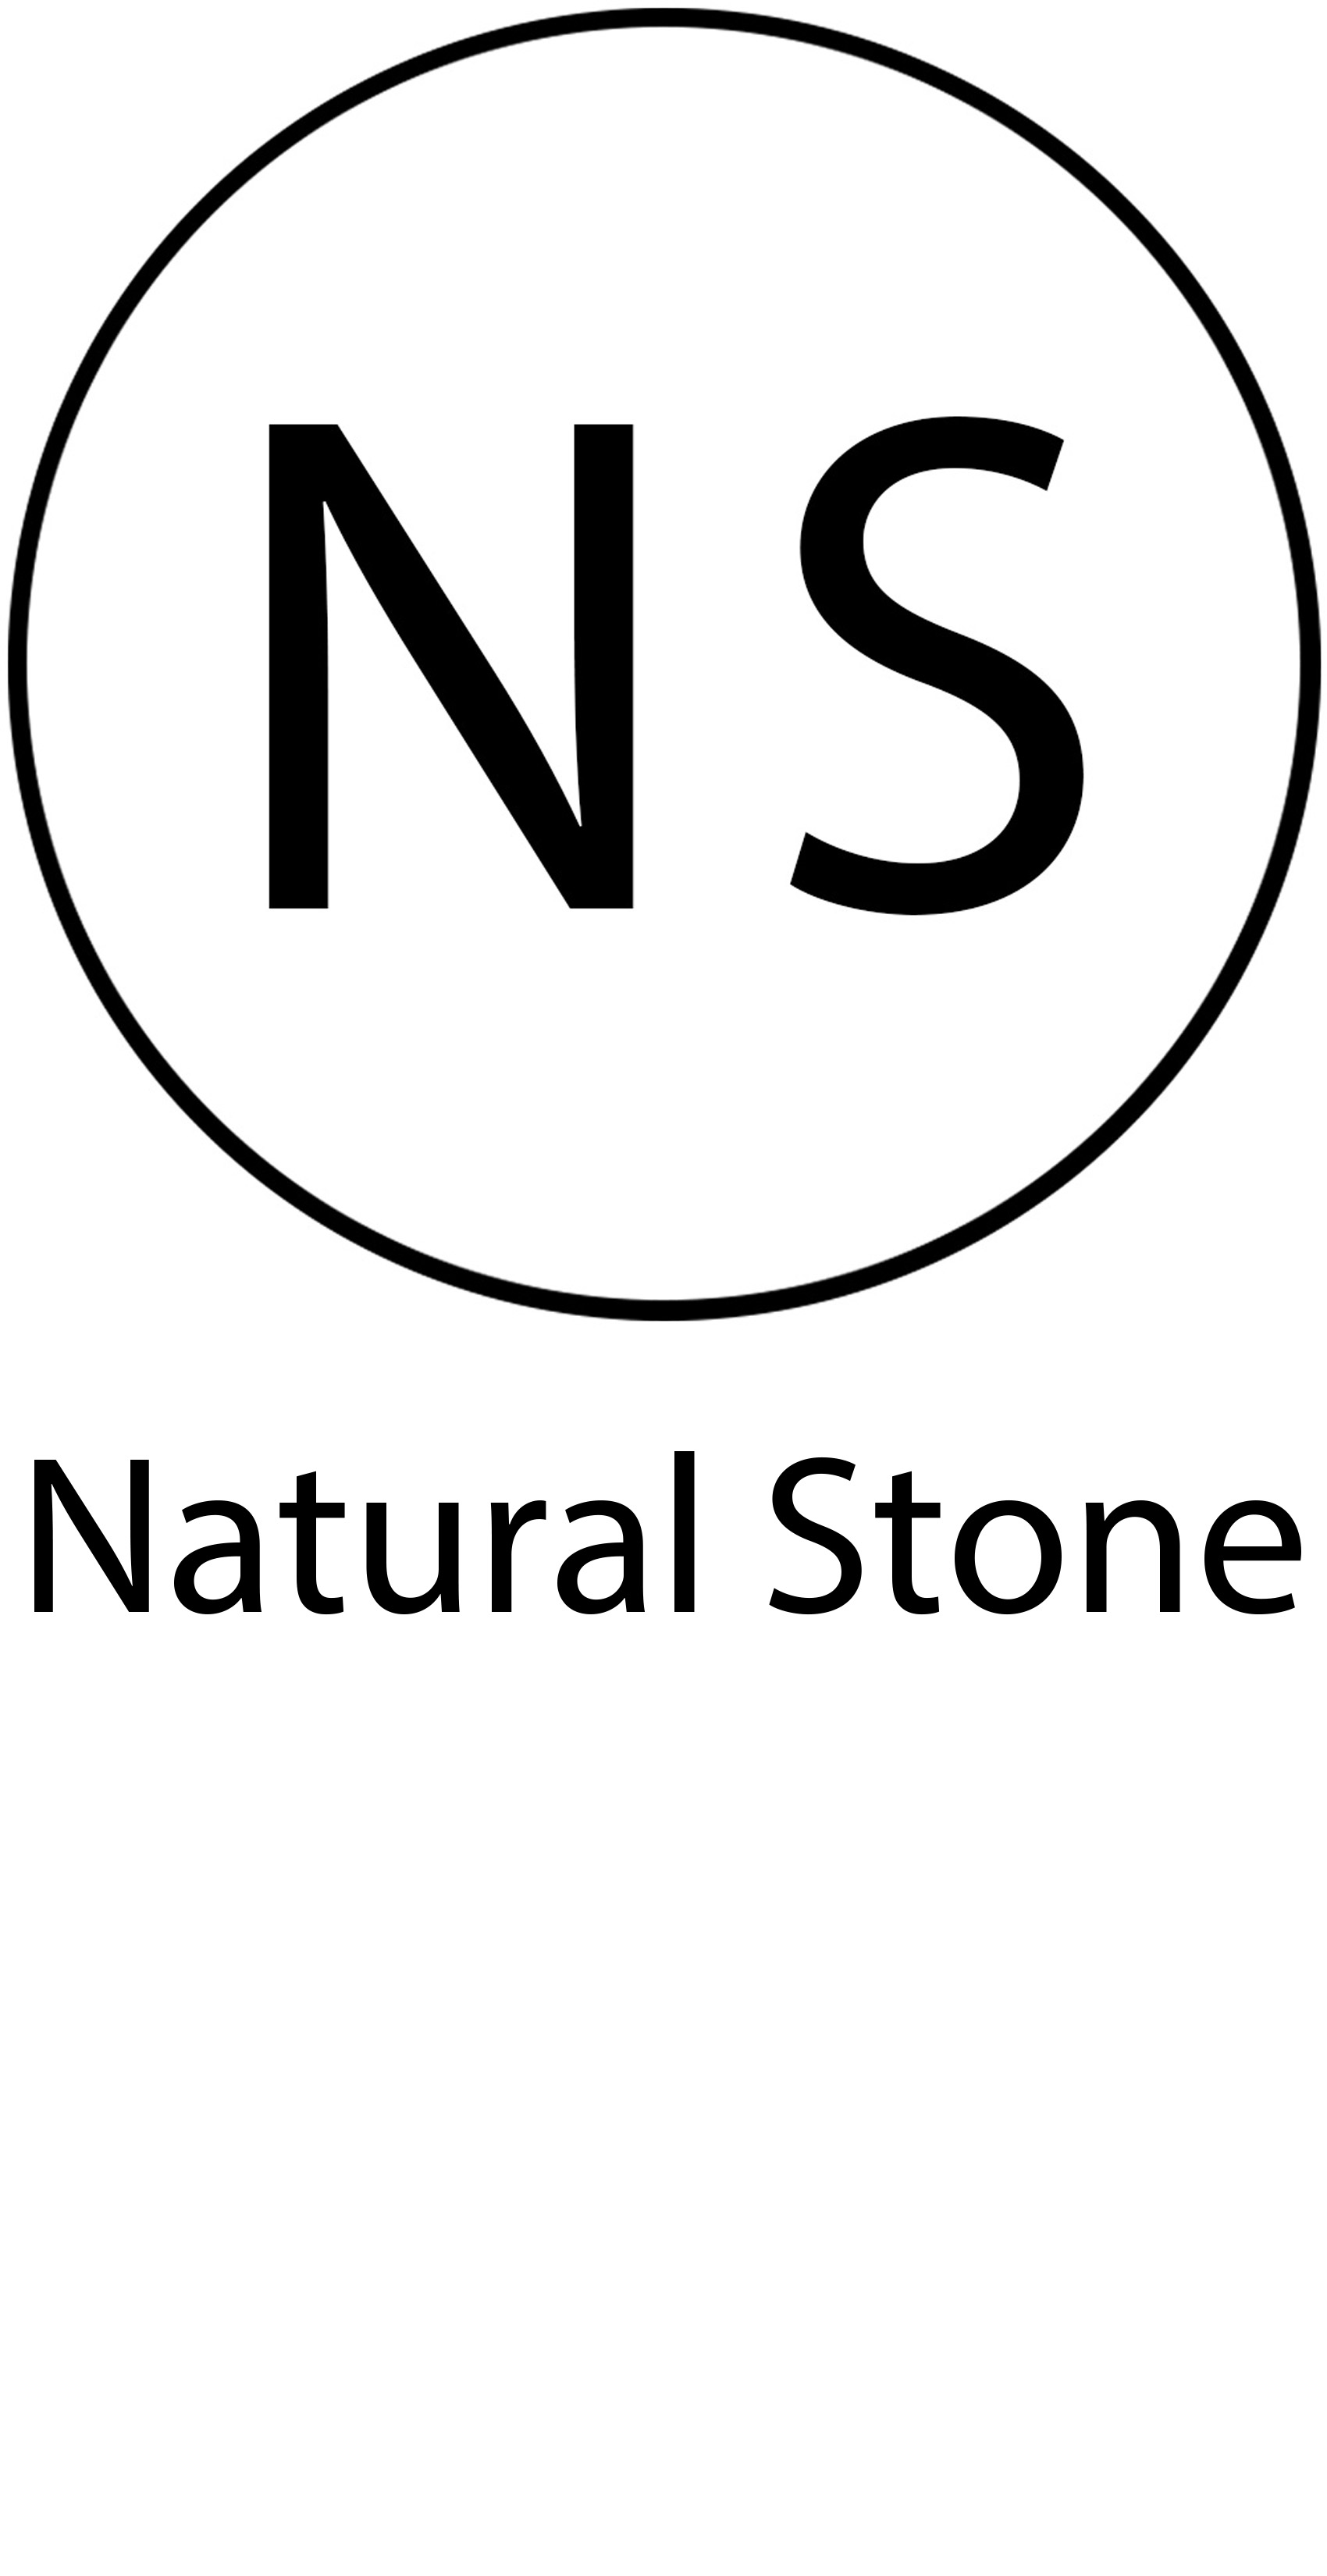 Natural stone.jpg